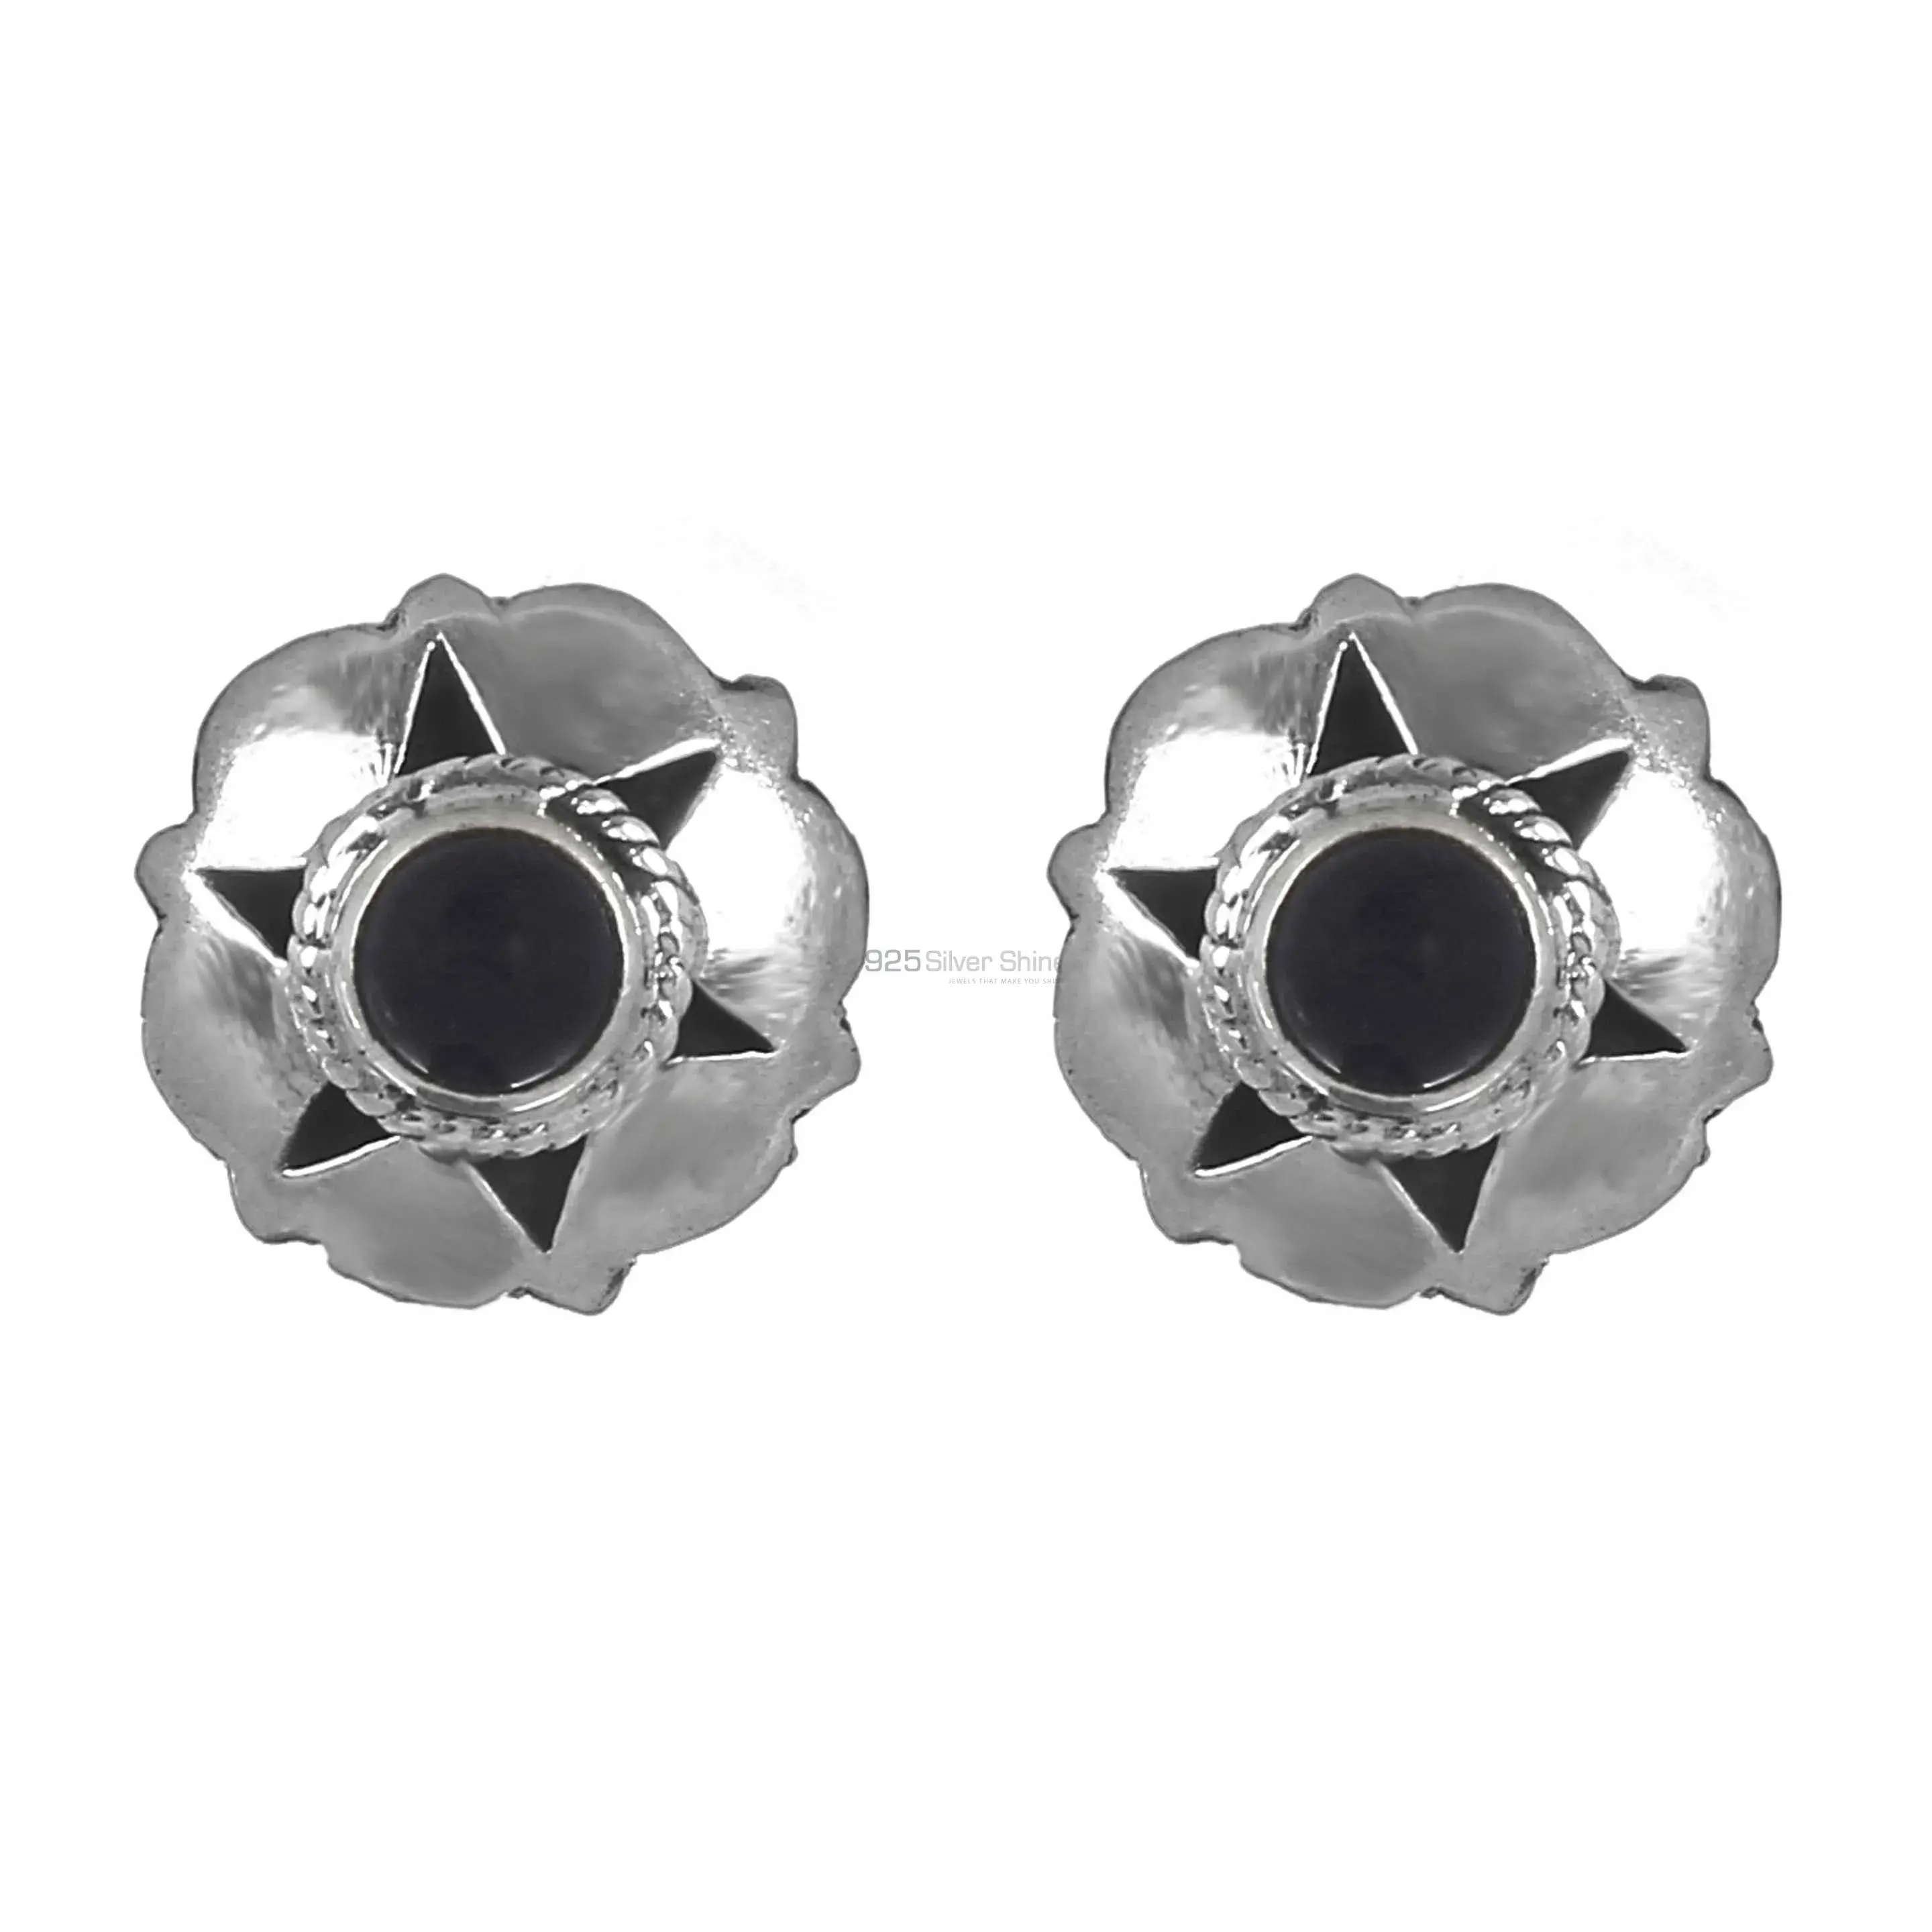 Top Quality 925 Sterling Silver Earrings In Black Onyx Gemstone Jewelry 925SE267